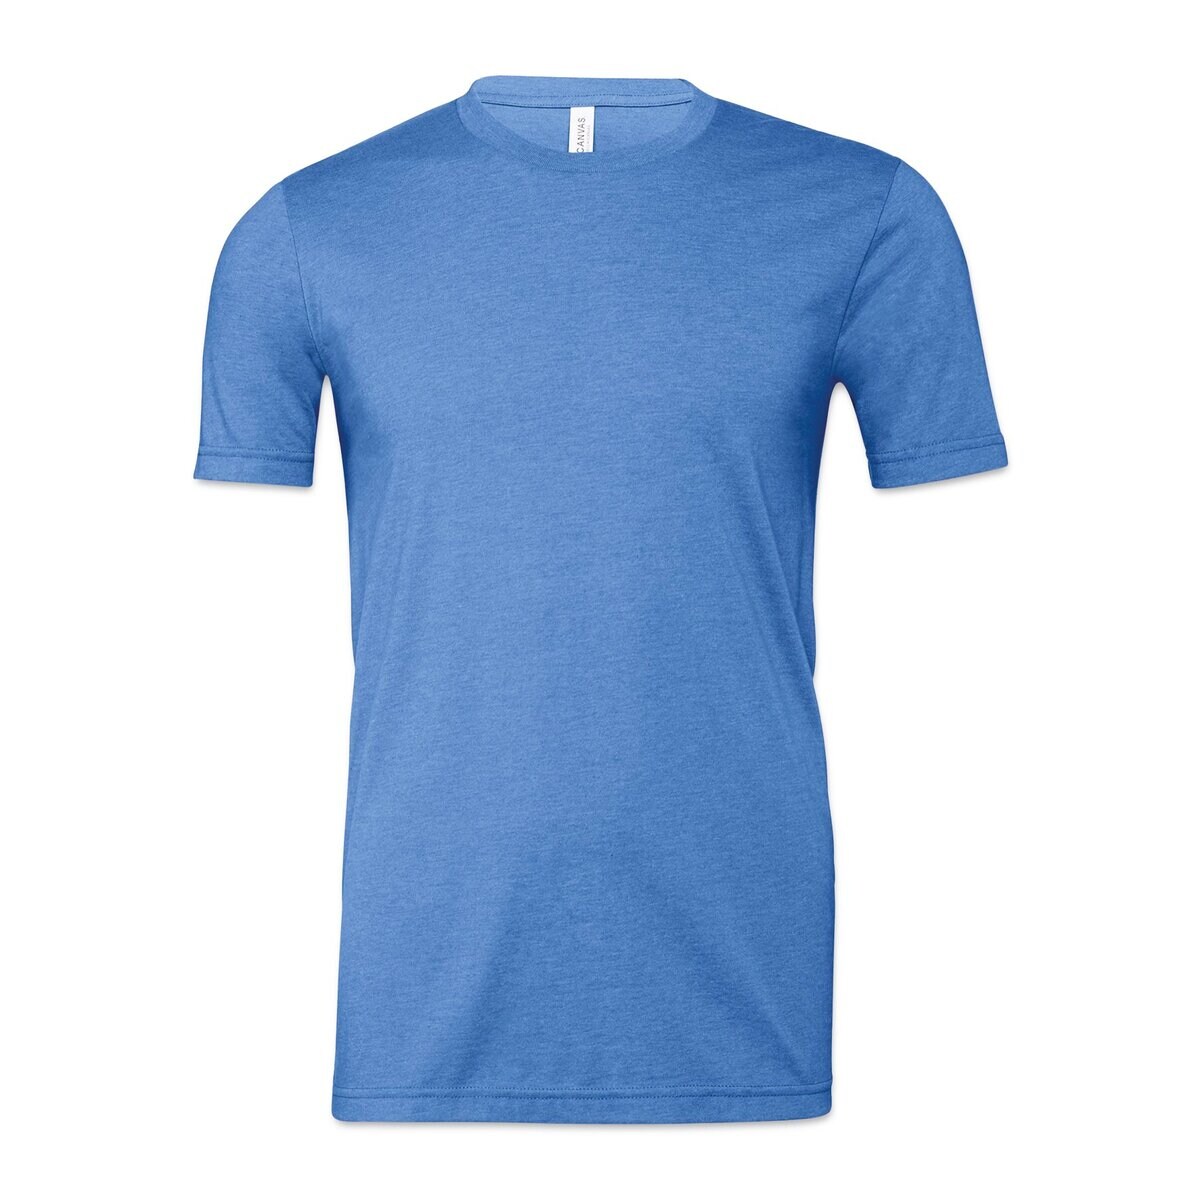 Bella Canvas Unisex T-shirt - Columbia Blue Heather, Medium